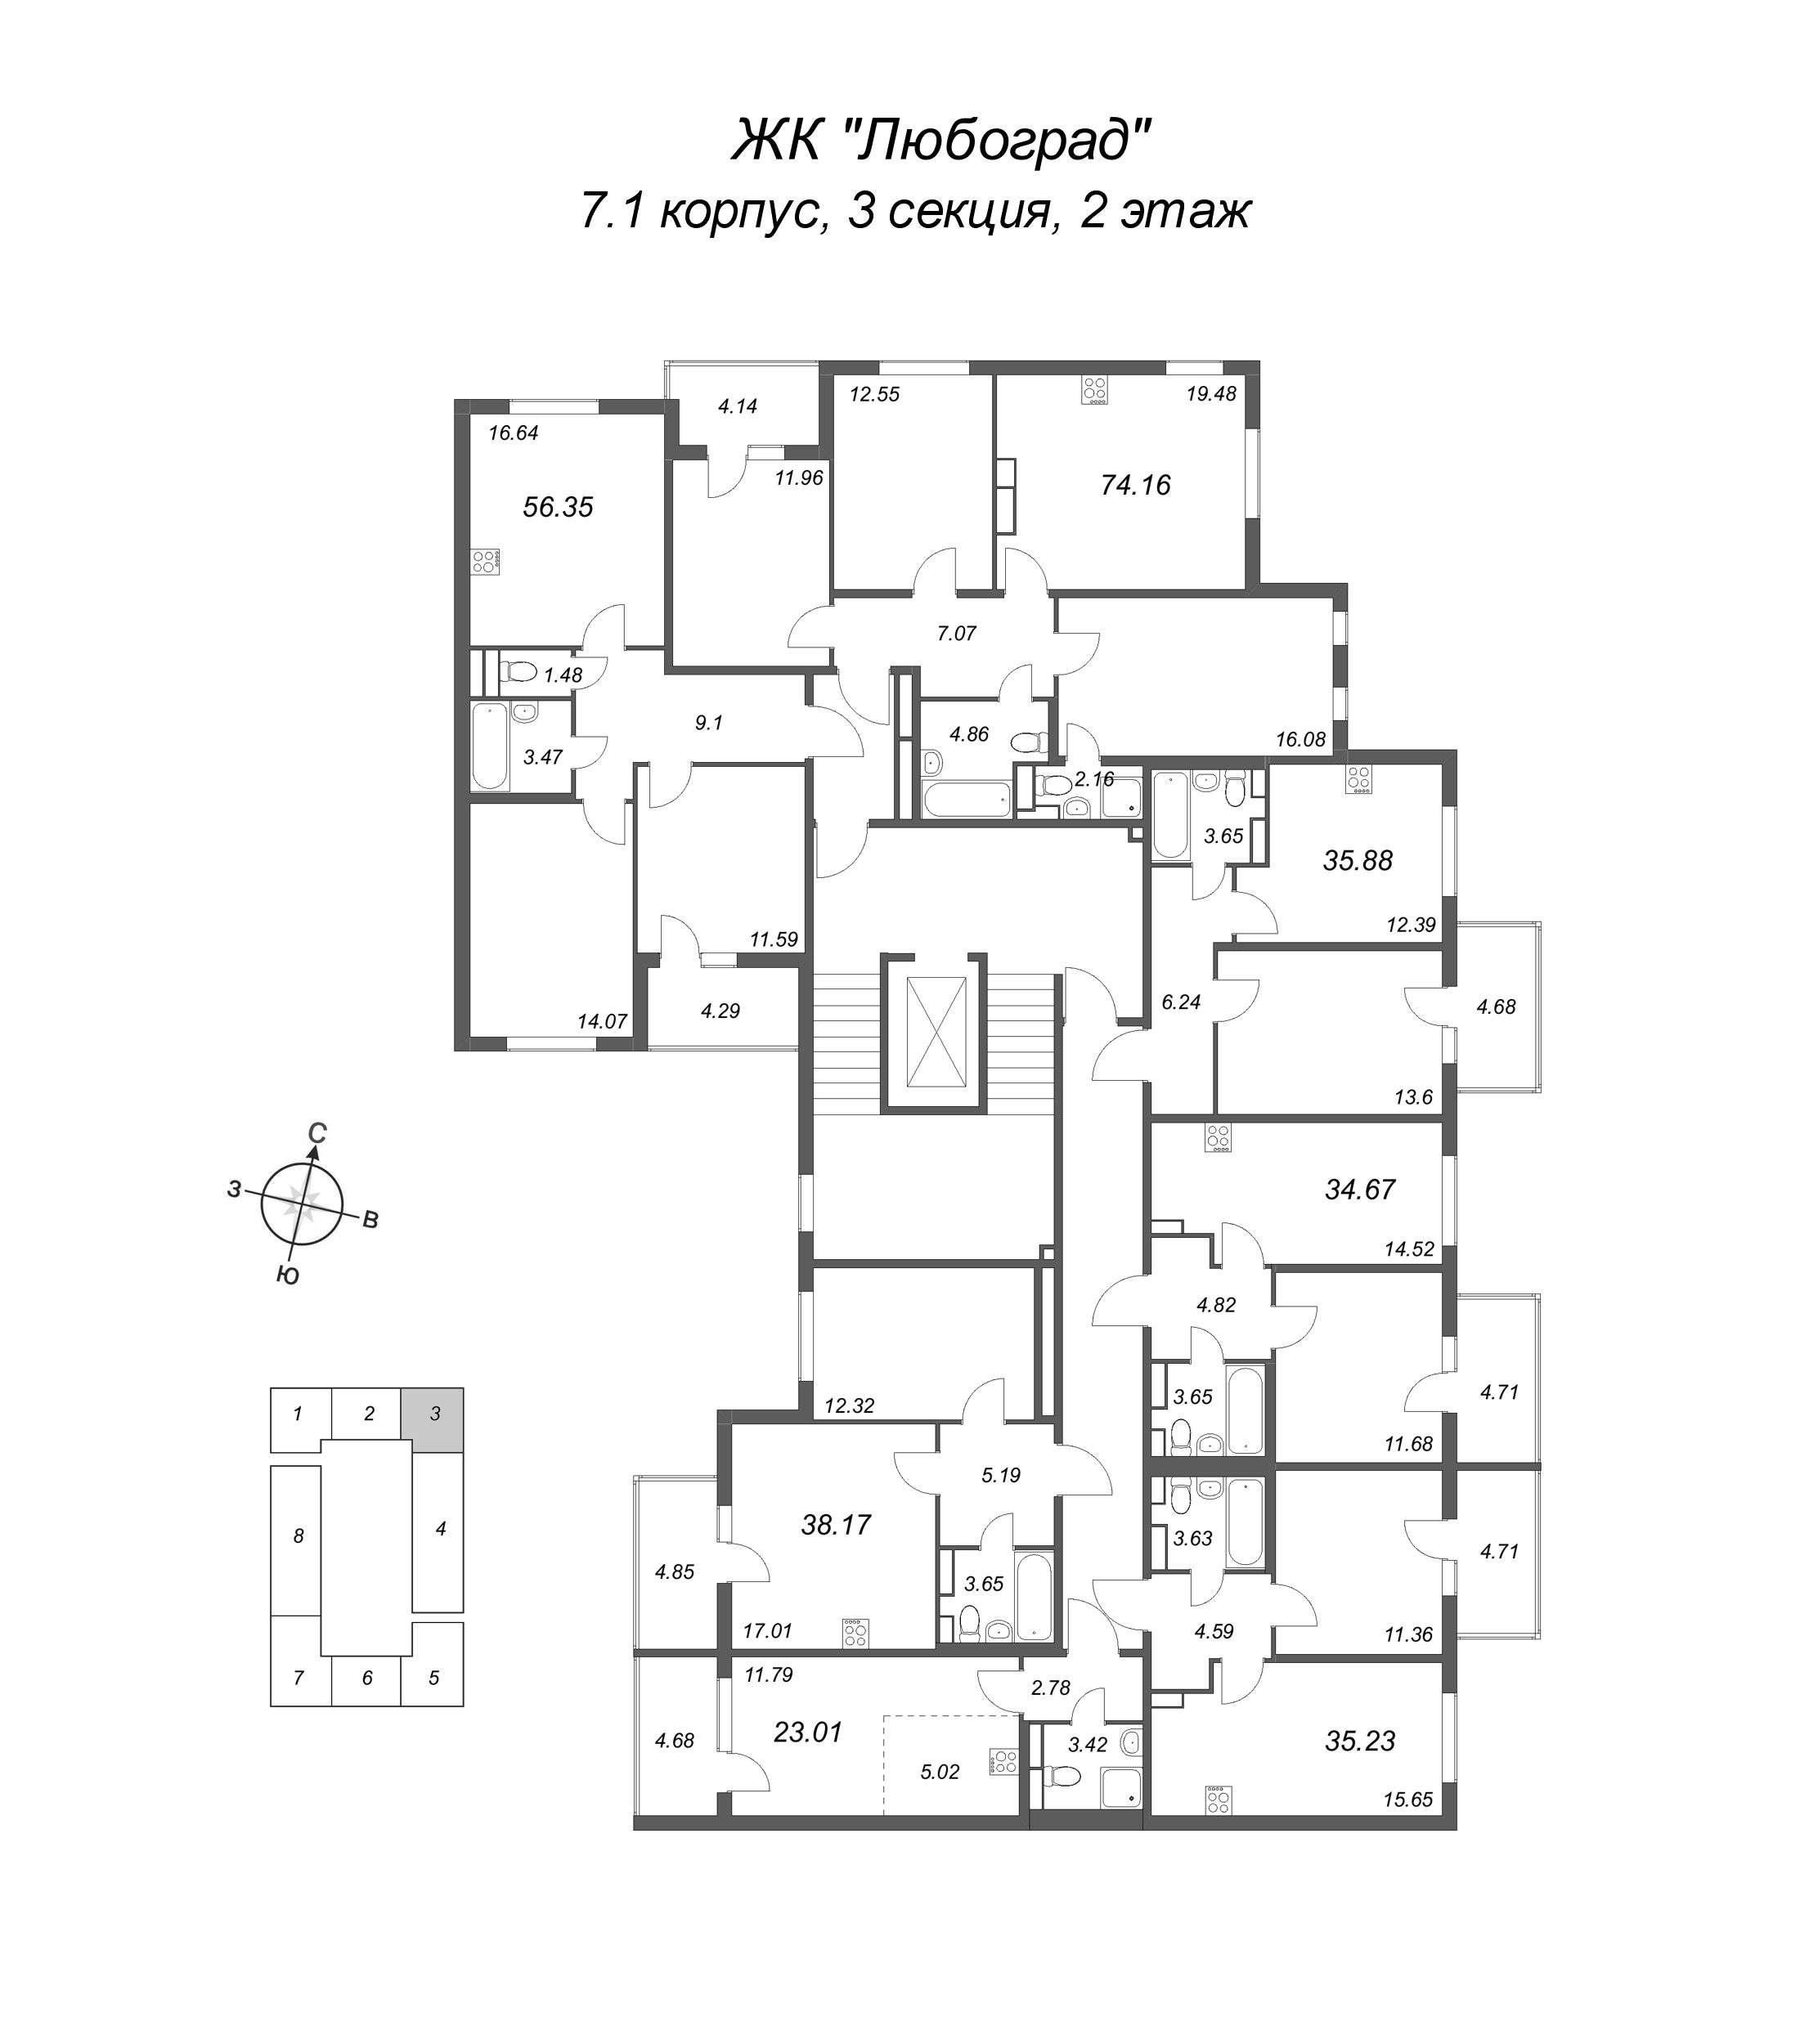 4-комнатная (Евро) квартира, 74.16 м² - планировка этажа